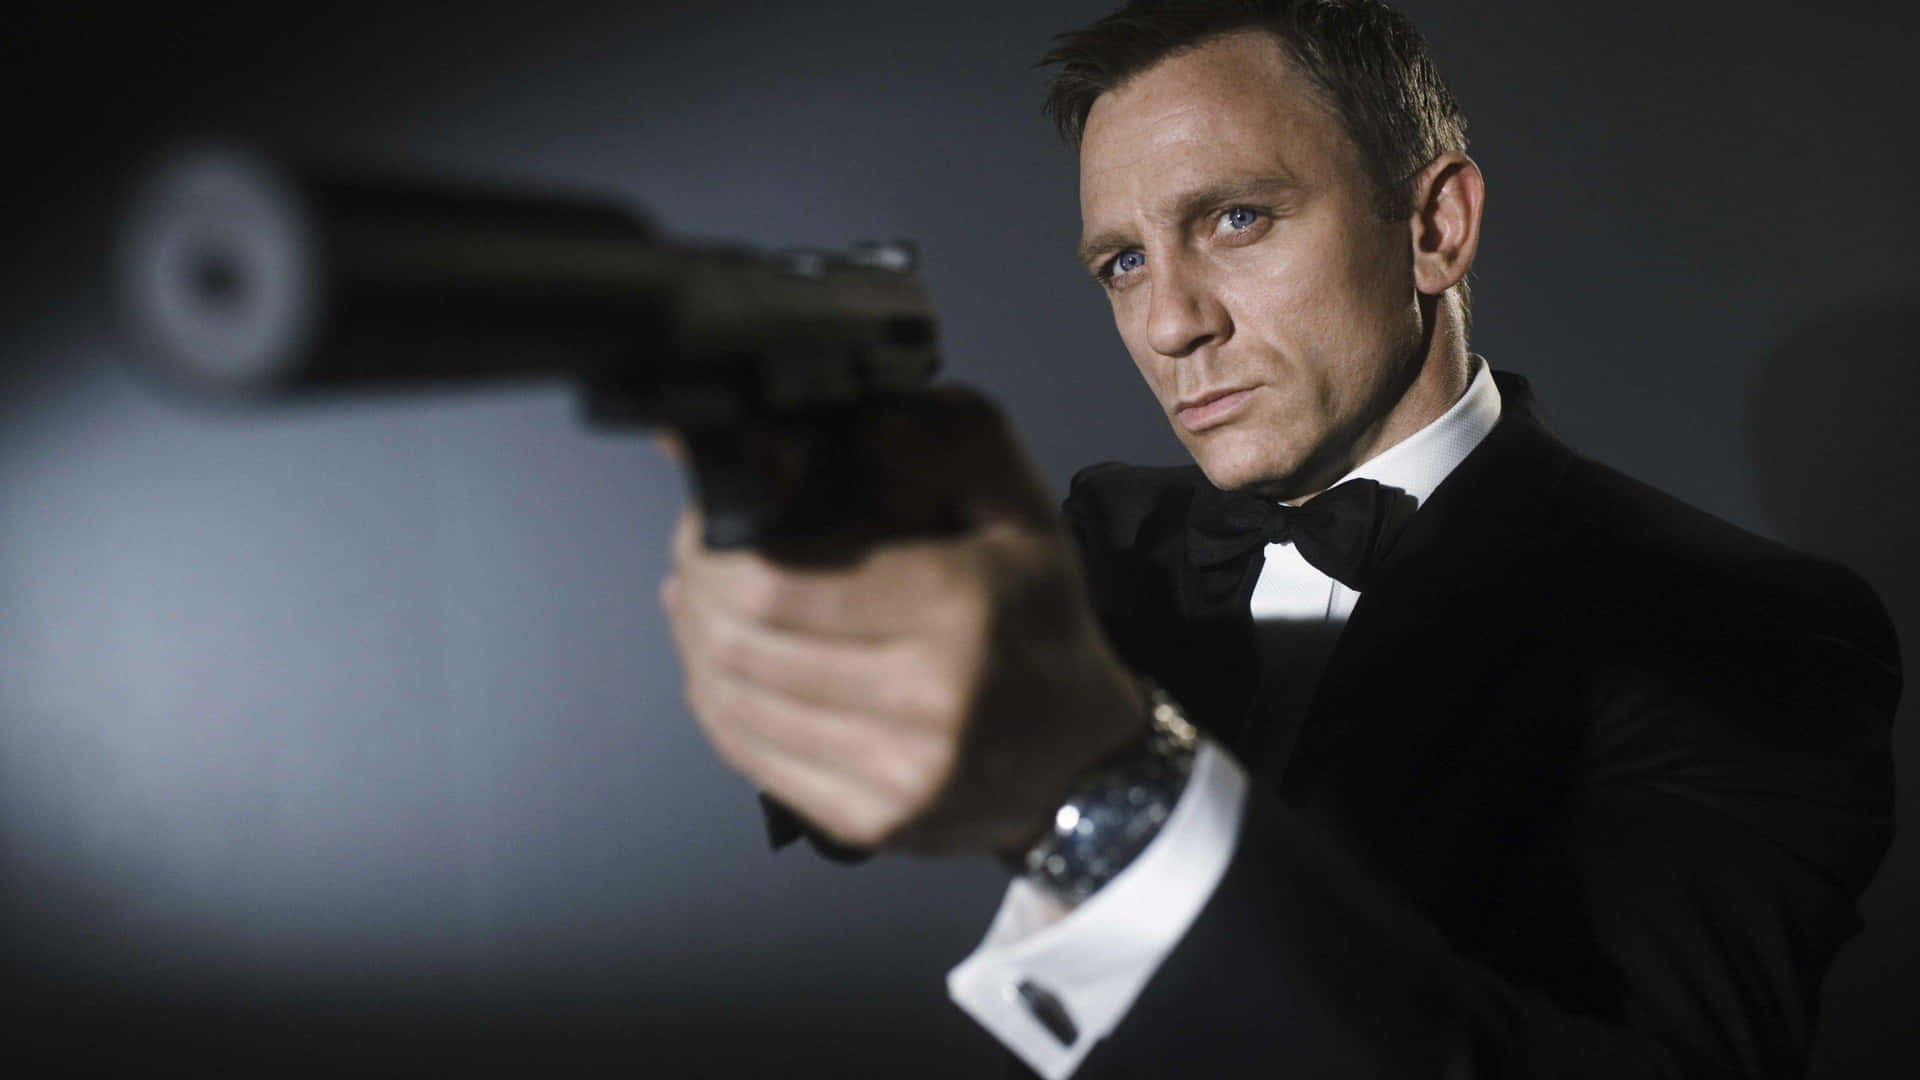 James Bond Action Pose4 K Wallpaper